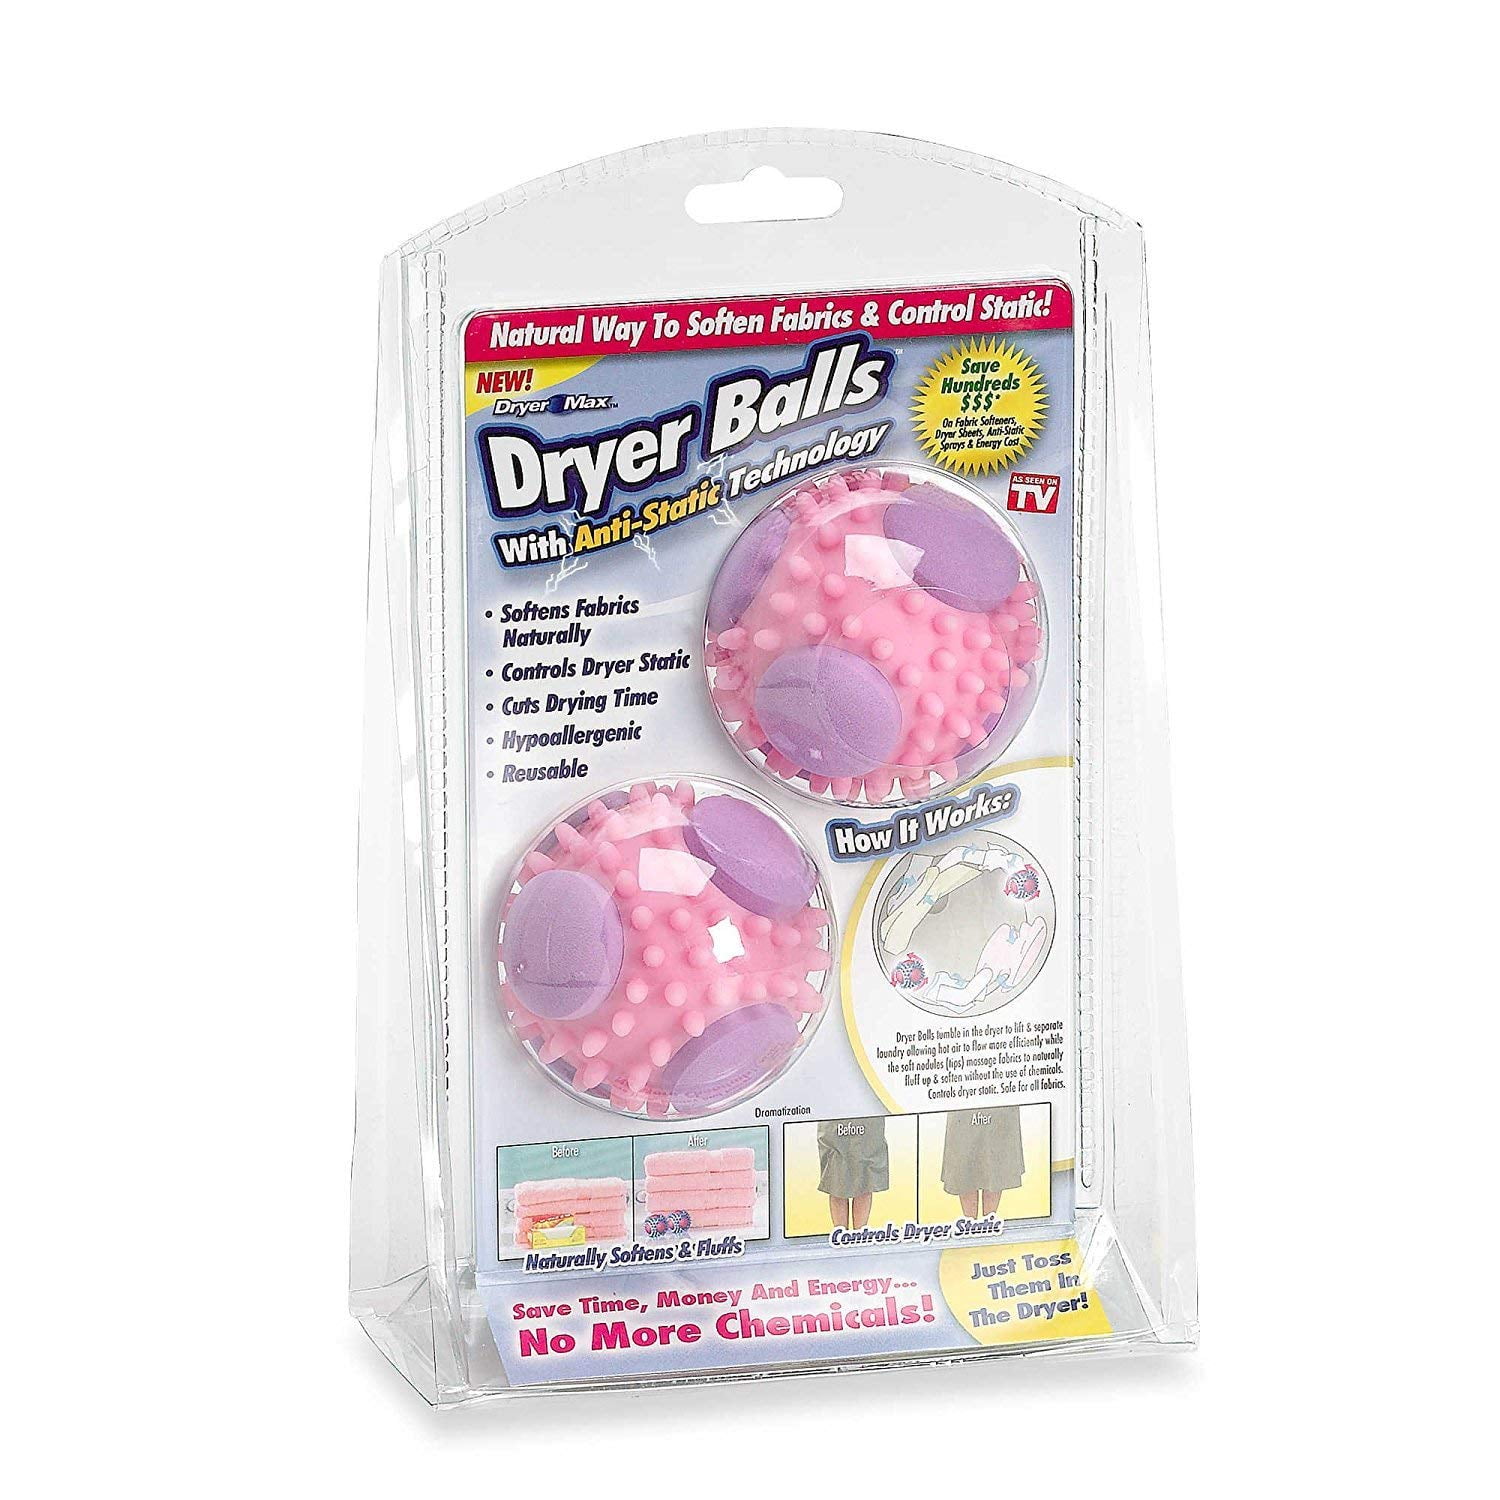 dryer max anti static balls